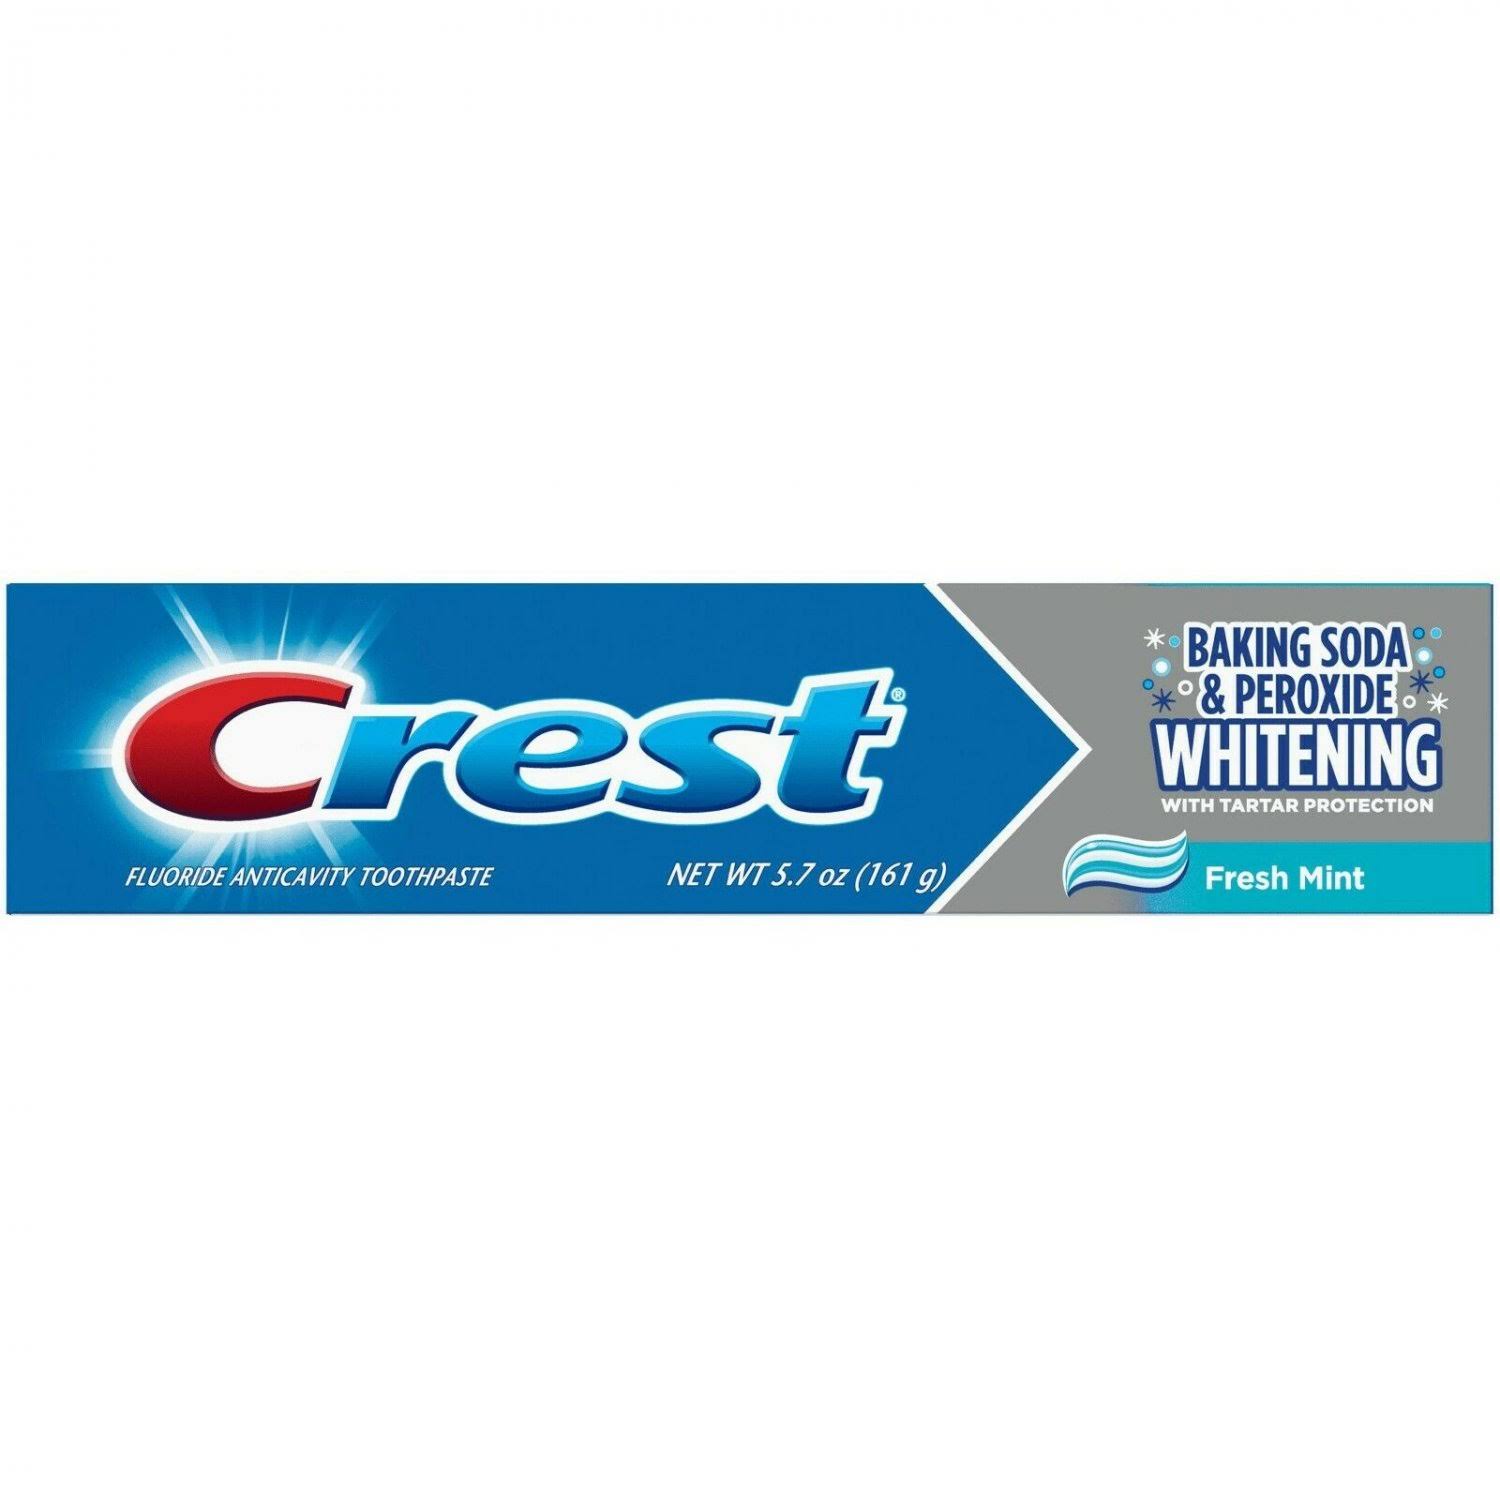 Crest Whitening Baking Soda & Peroxide Fresh Mint Toothpaste 5.7 oz